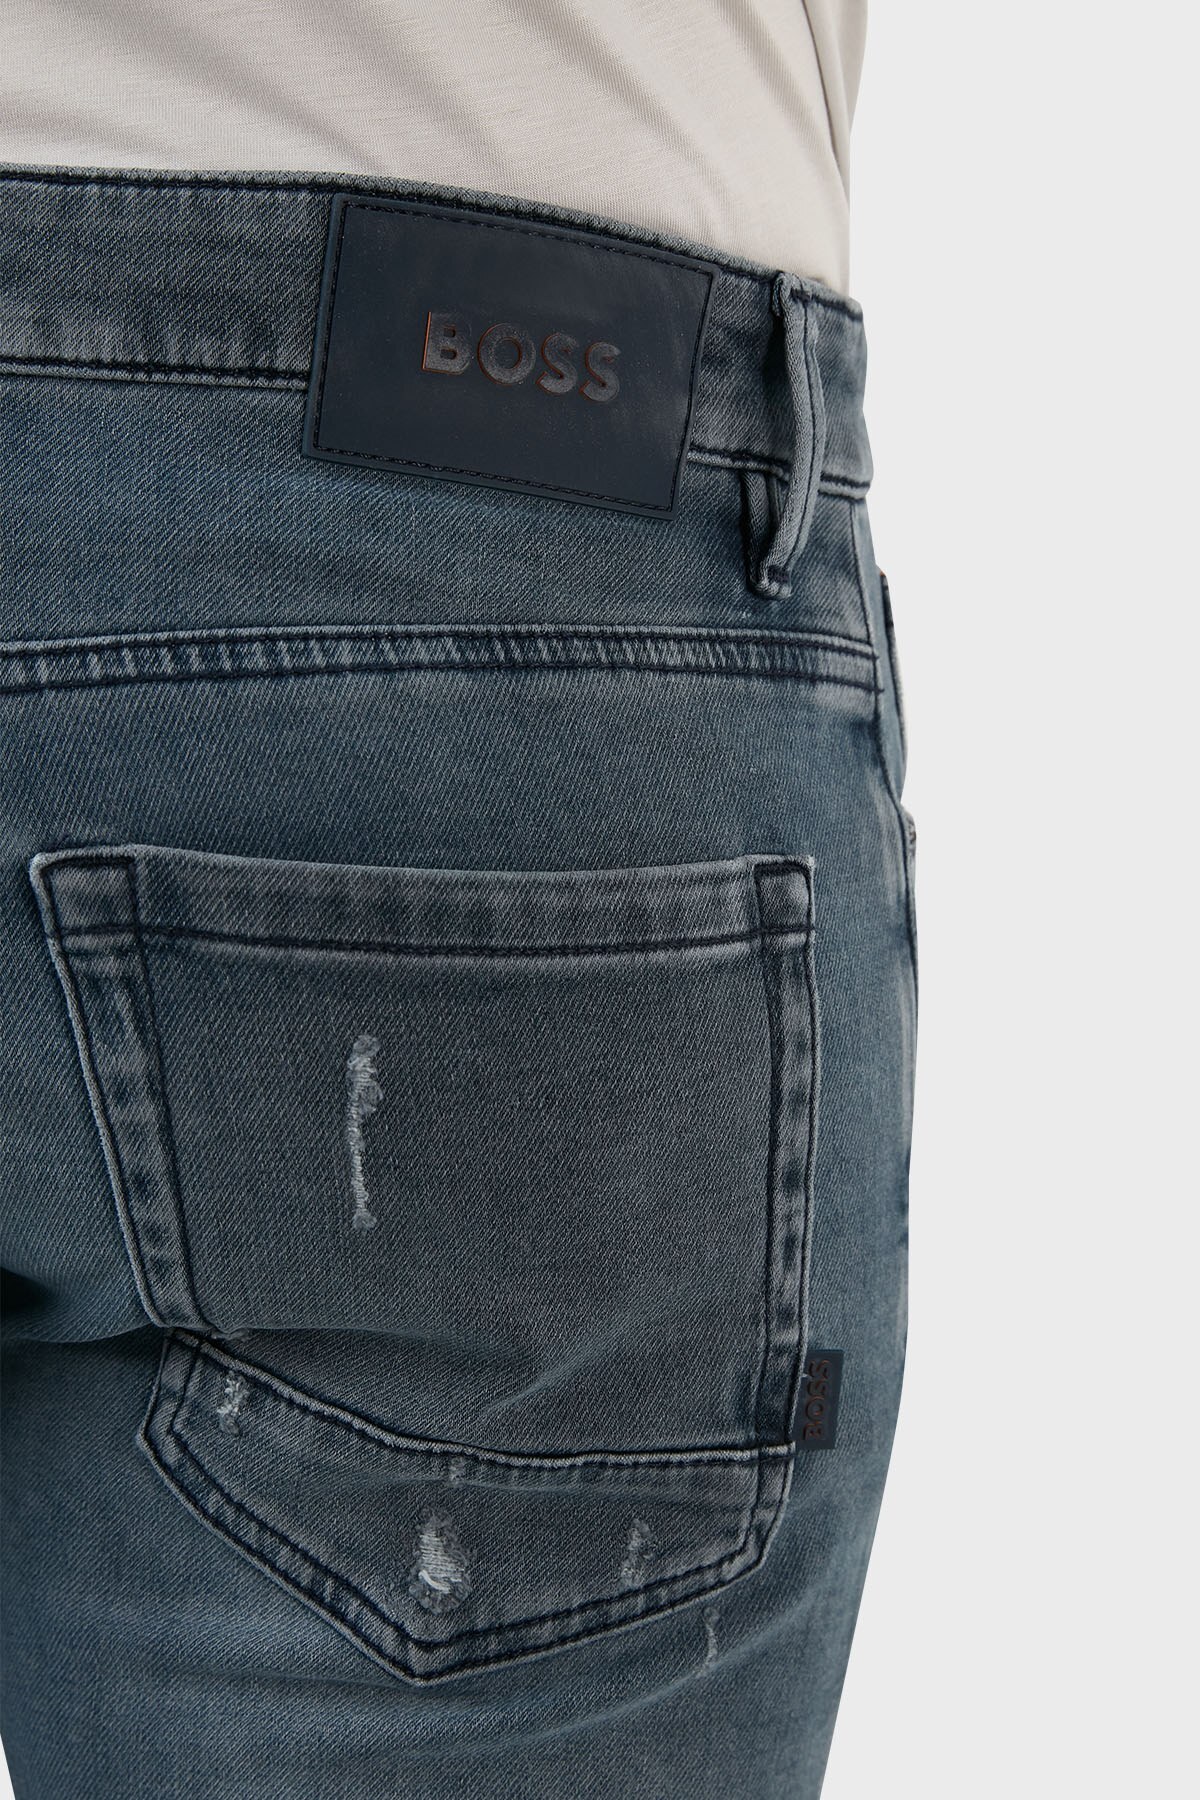 Boss Pamuklu Normal Bel Slim Fit Dar Paça Streç Jeans Erkek Kot Pantolon 50468639 406 LACİVERT